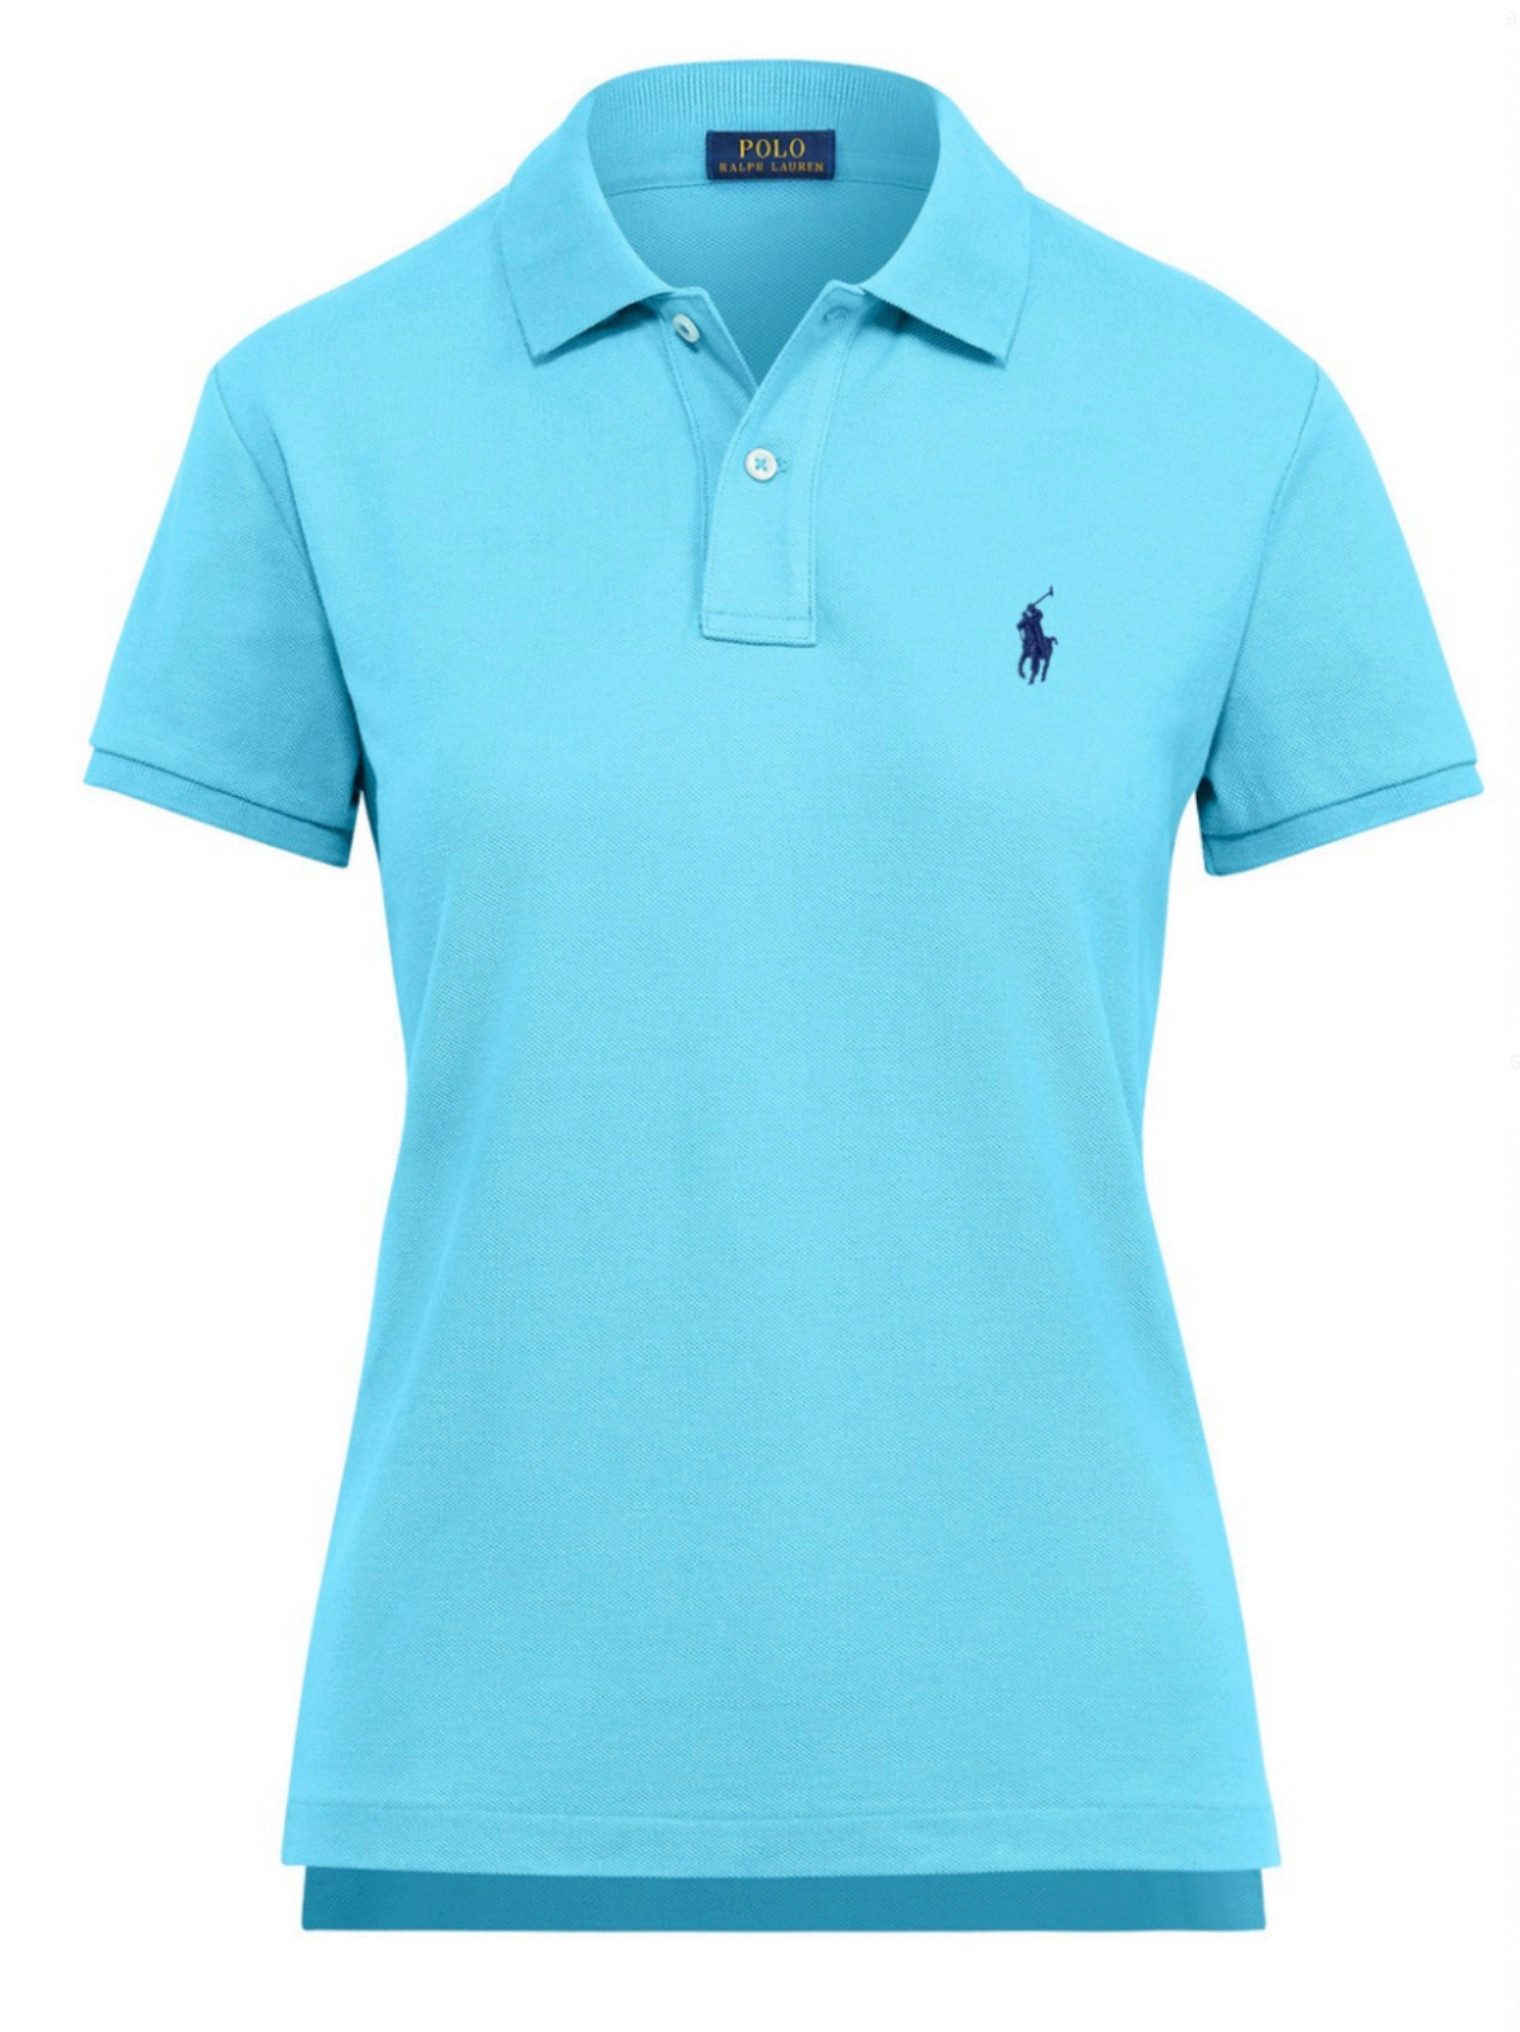 Polo Ralph Lauren Poloshirt Poloshirt Polohemd Shirt Bluse Hemd Pony Top Tee T-shirt